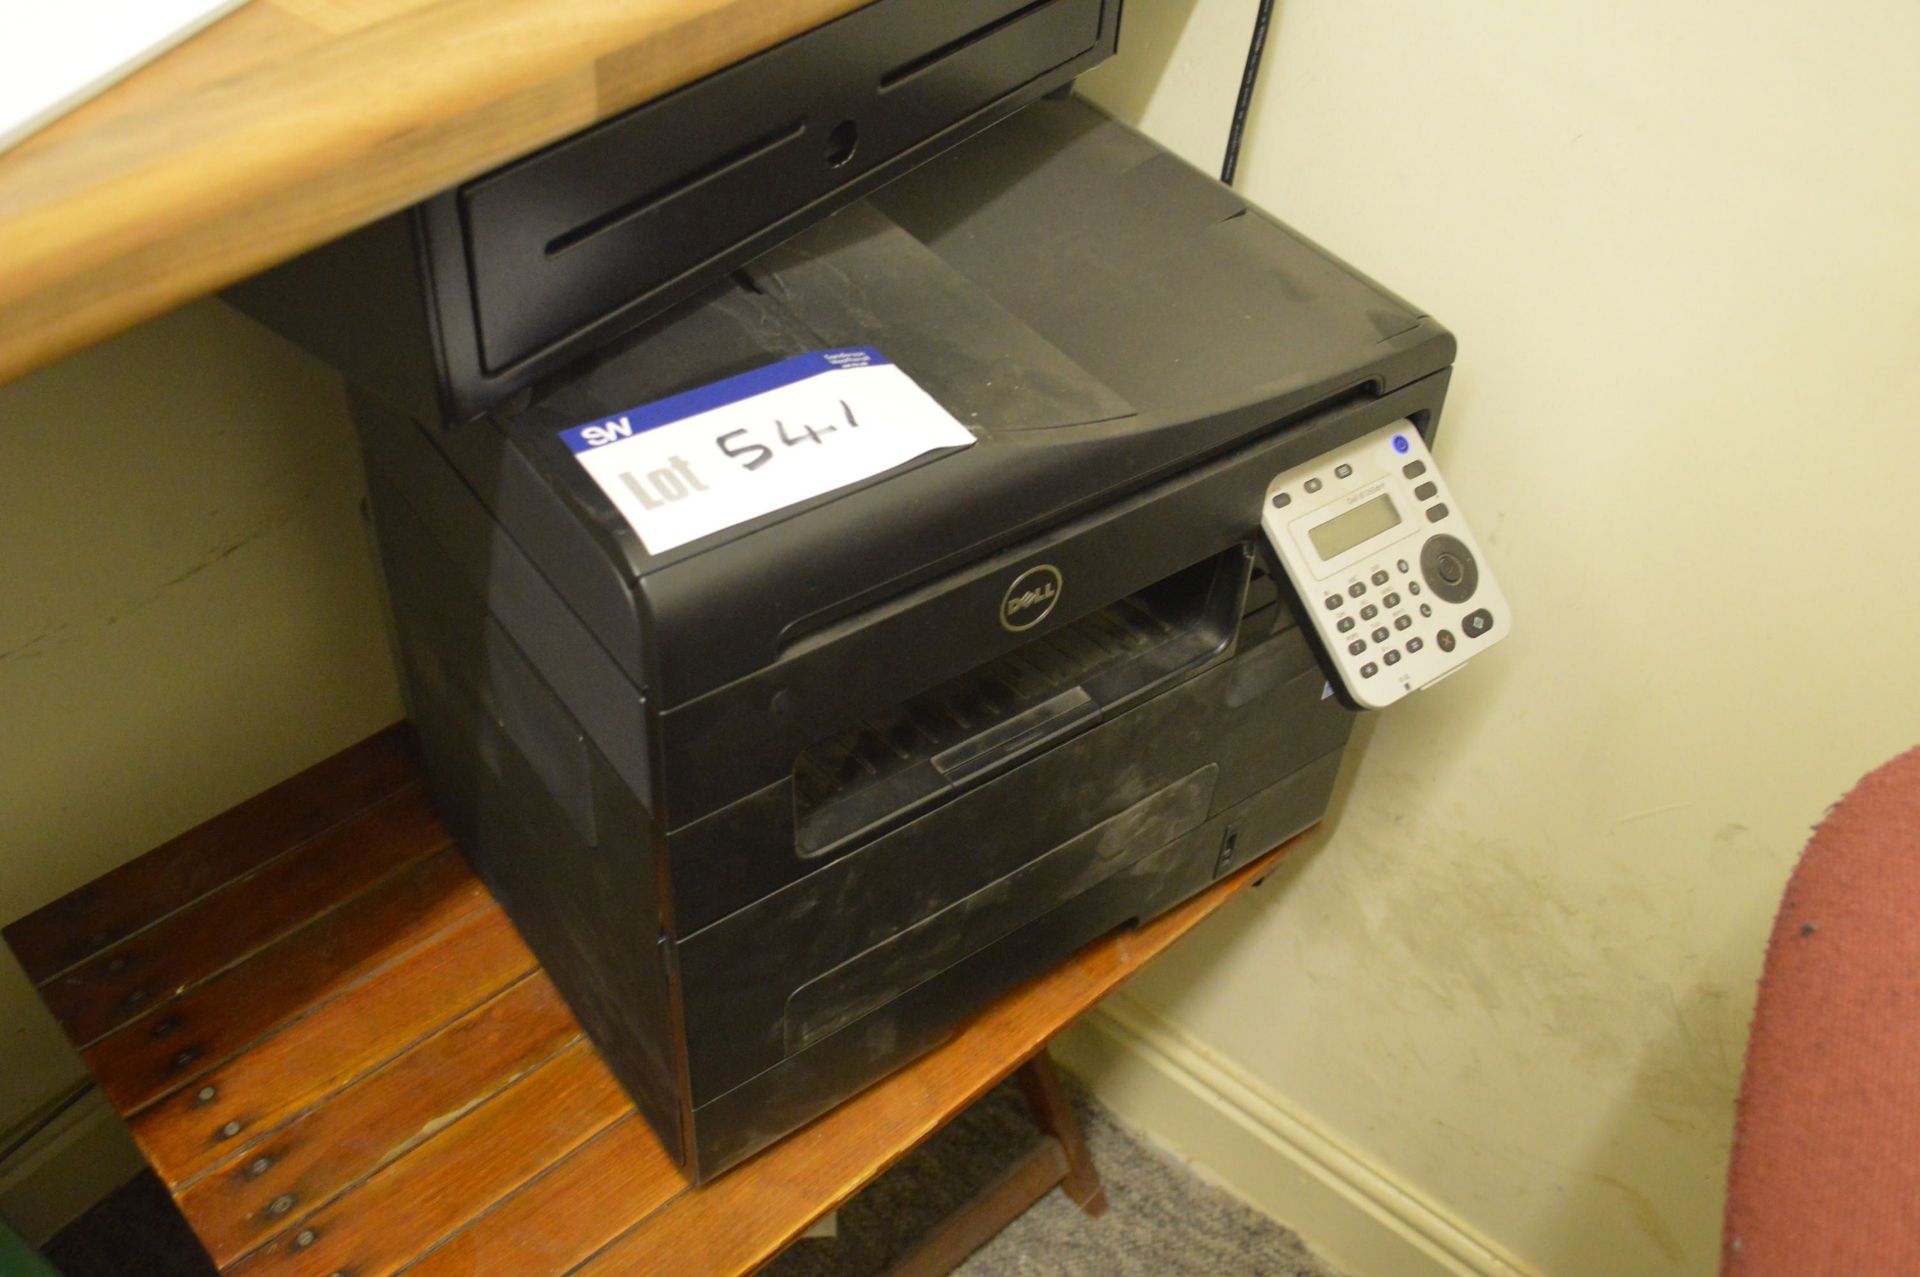 Dell B1265dnf Scanner Printer